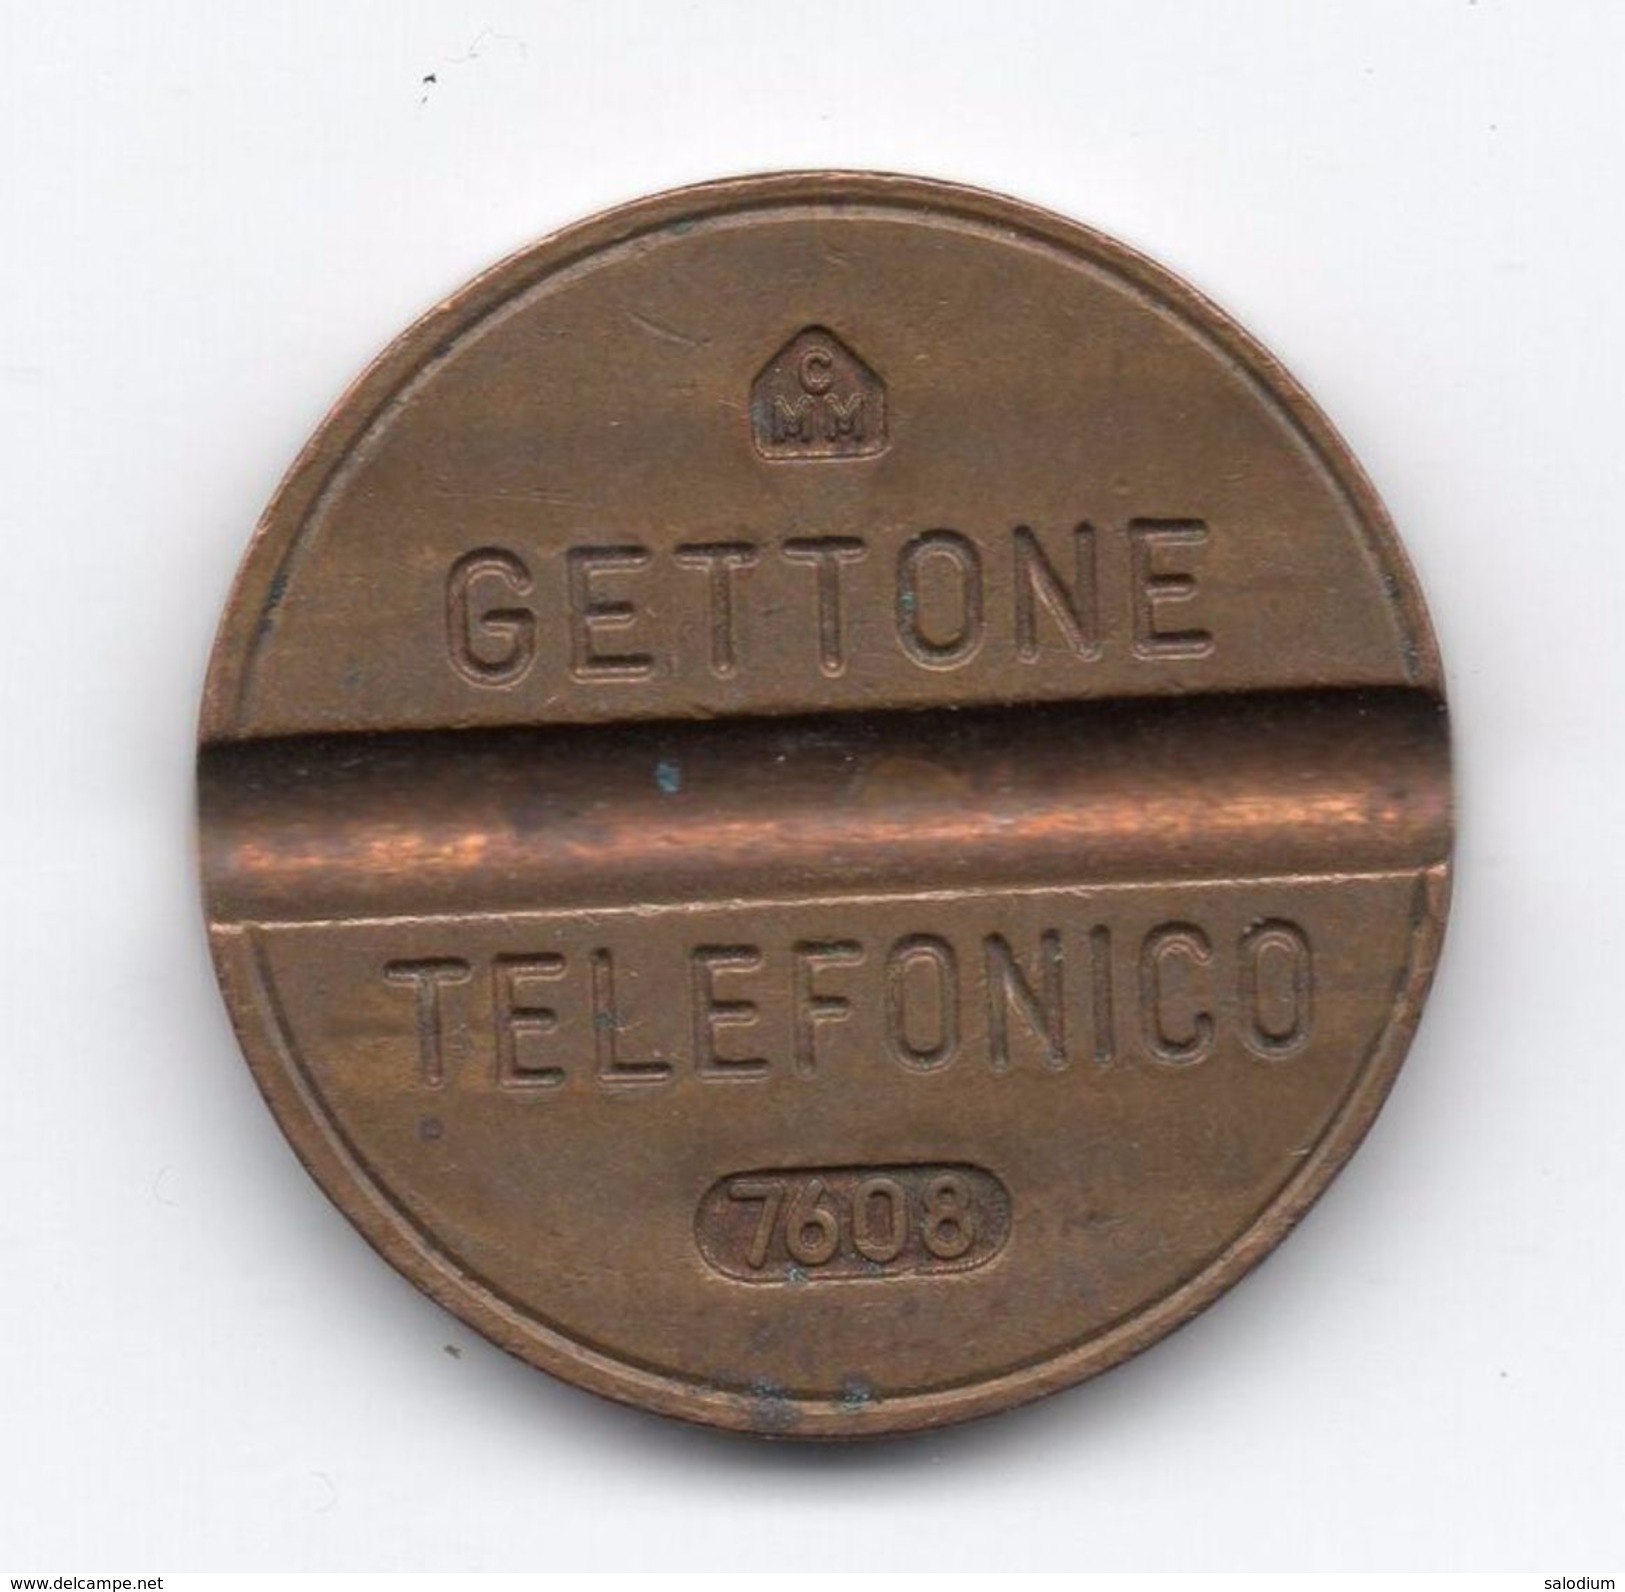 Gettone Telefonico 7608 Token Telephone - (Id-806) - Firma's